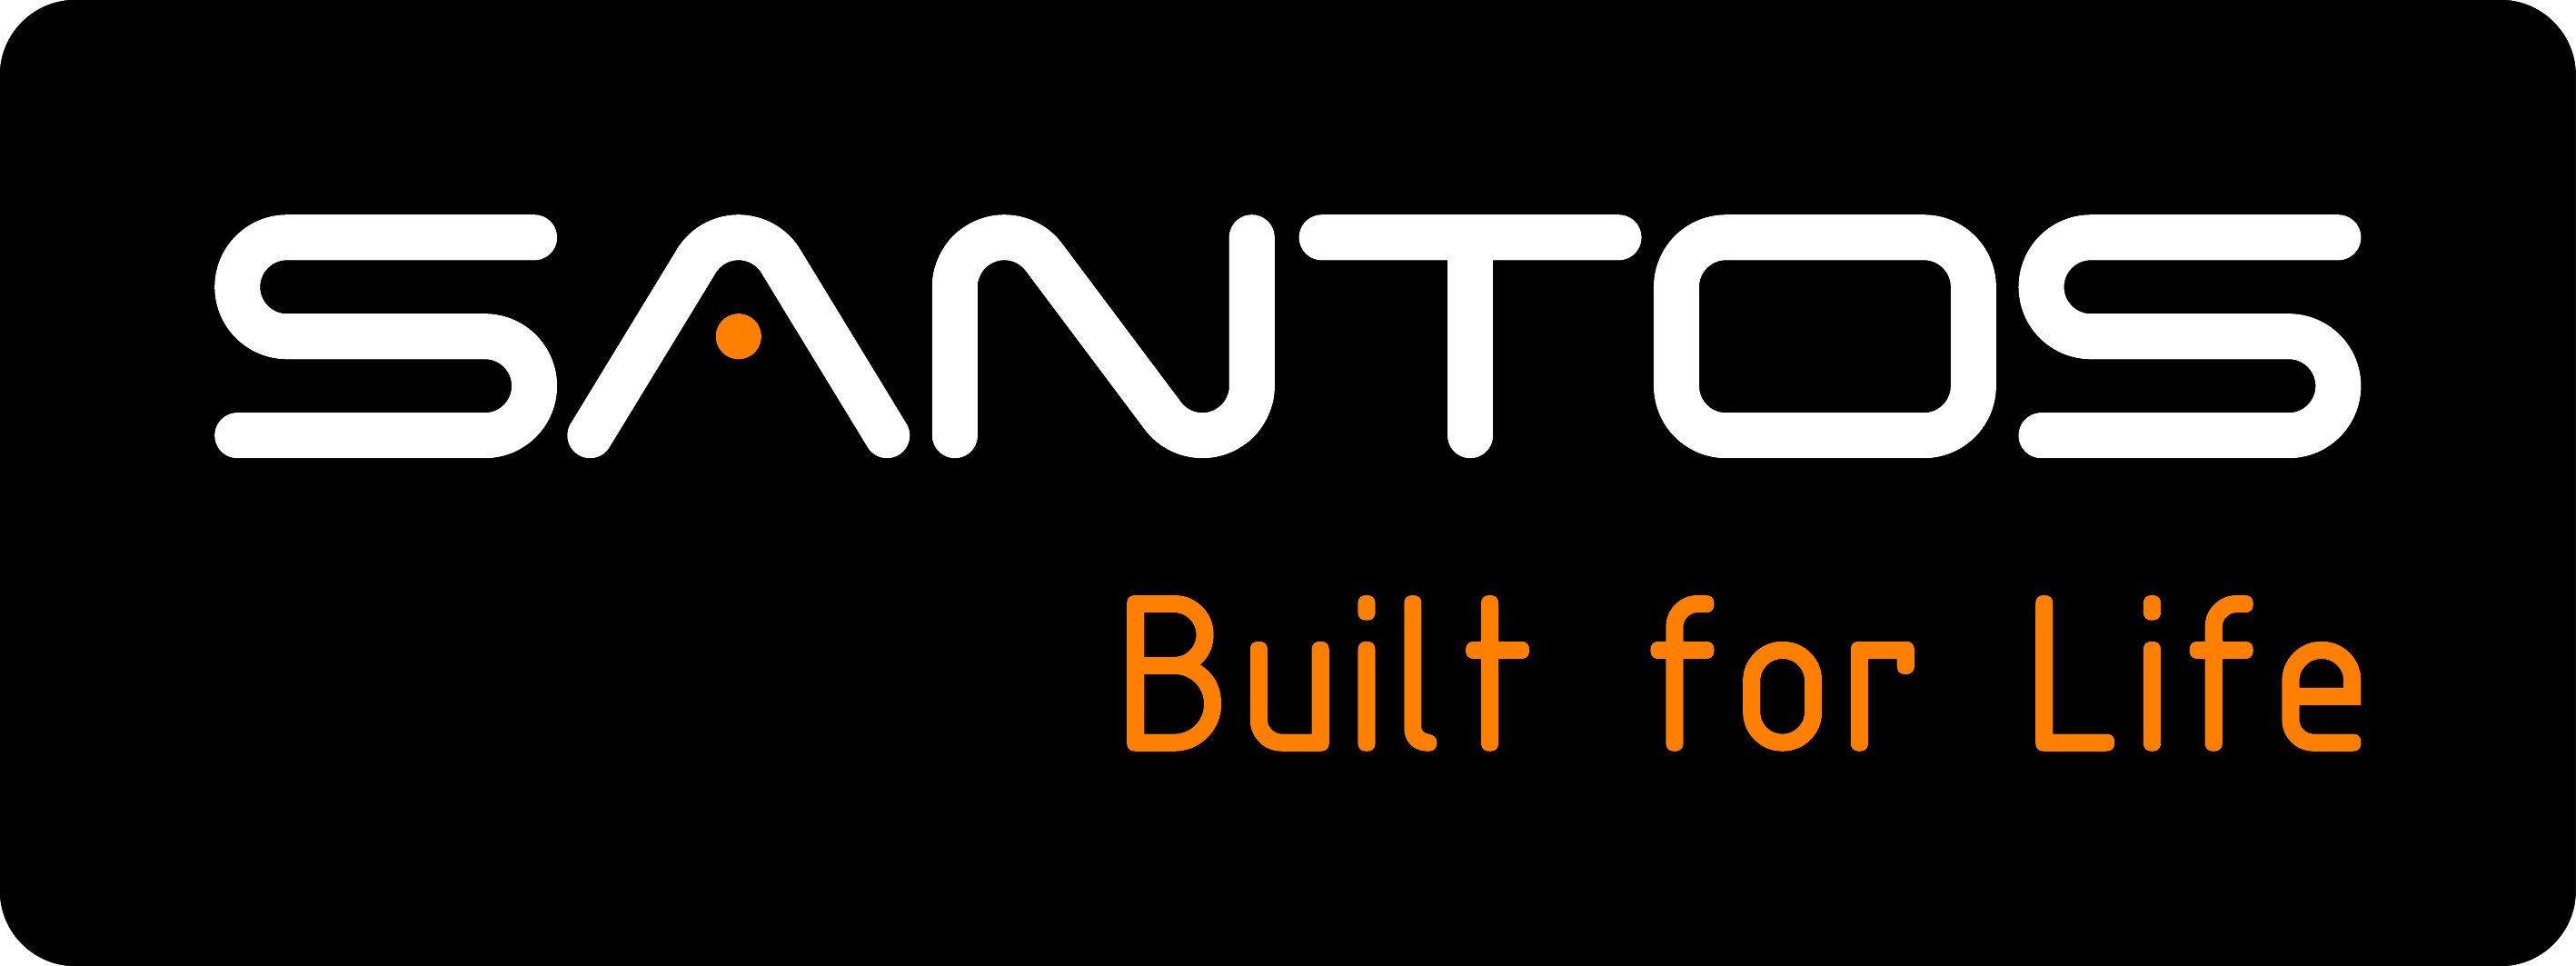 SANTOS built for Life_kader - versie 2017